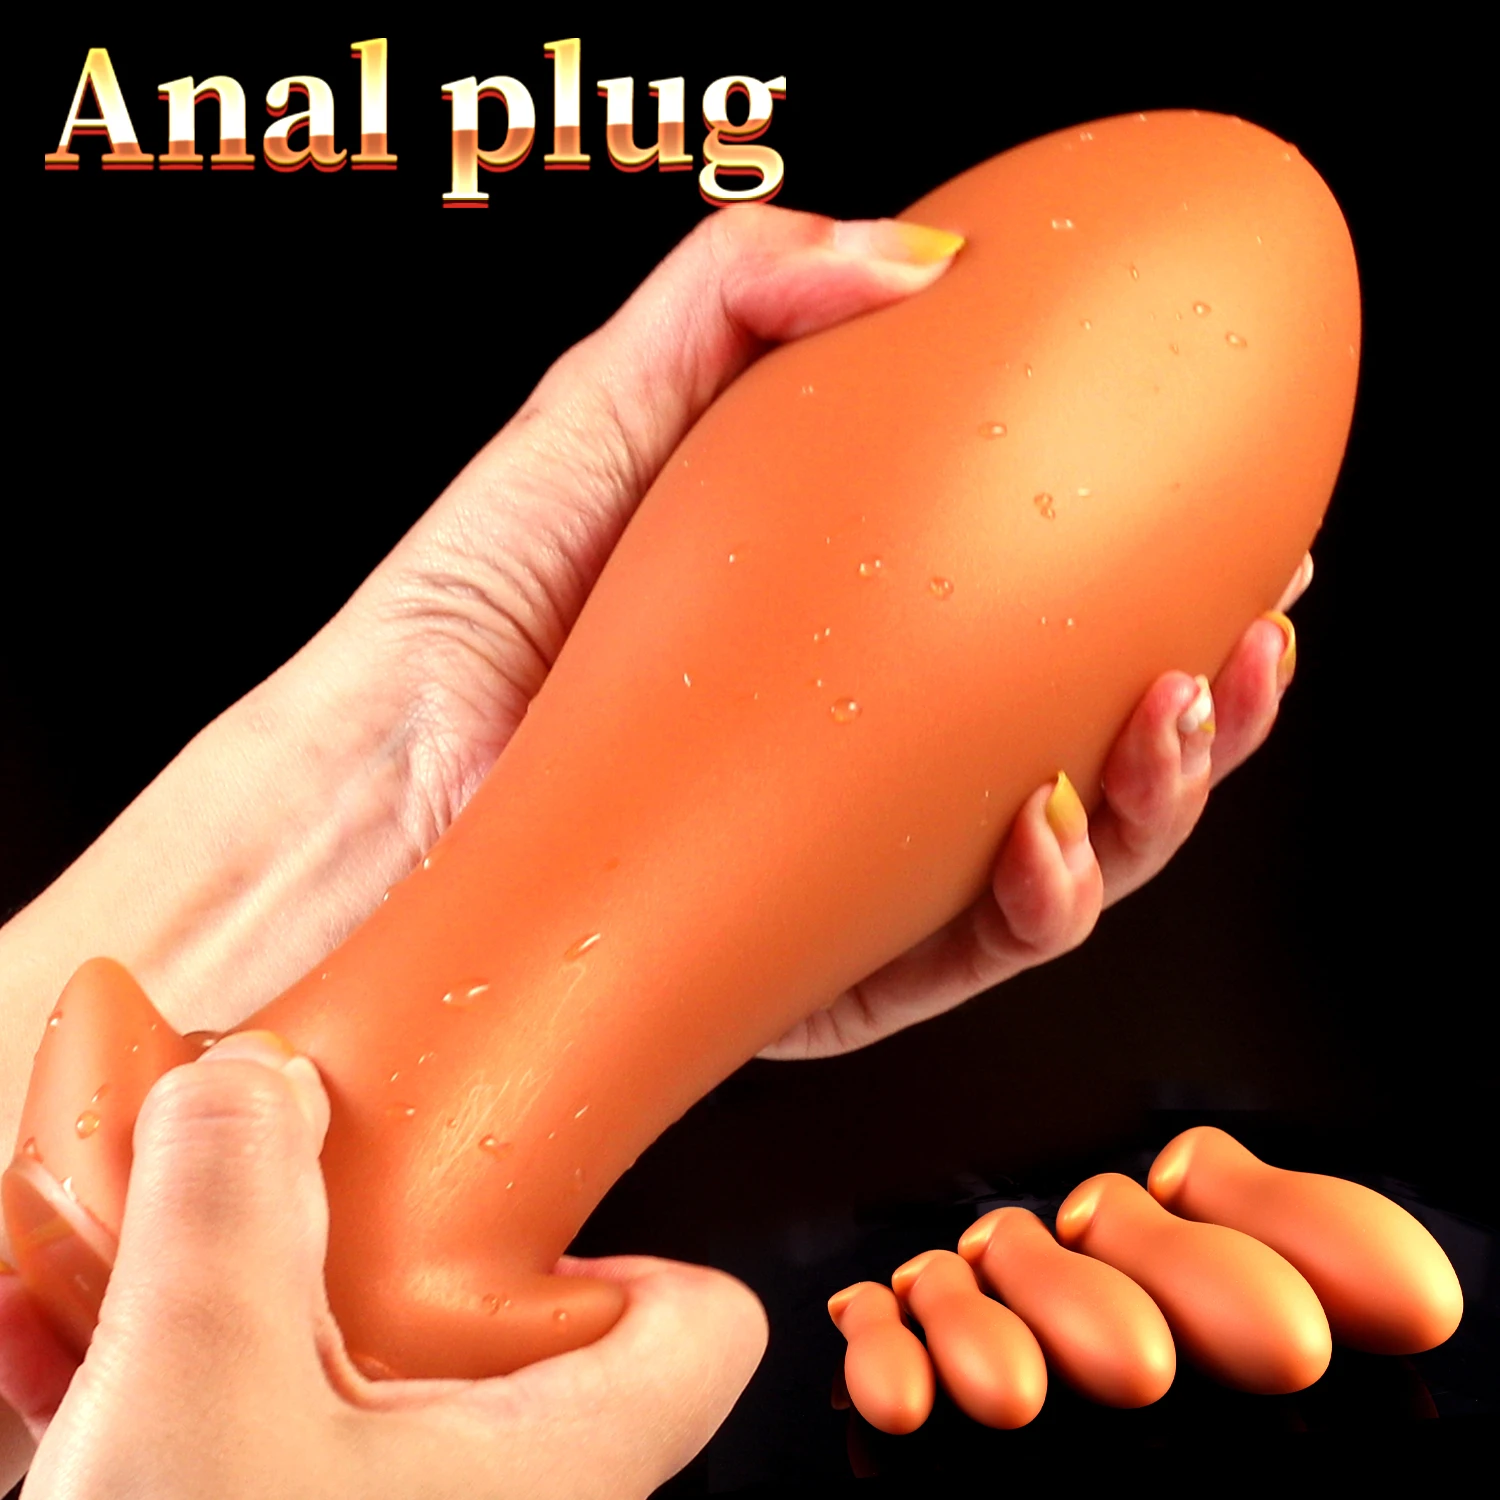 Huge Anal Plug buttplug bdsm Toy Intimate Sex Toys for Adult Games Sextoys Big Butt Plug Dildo Anal Dilator Vaginal balls Shop